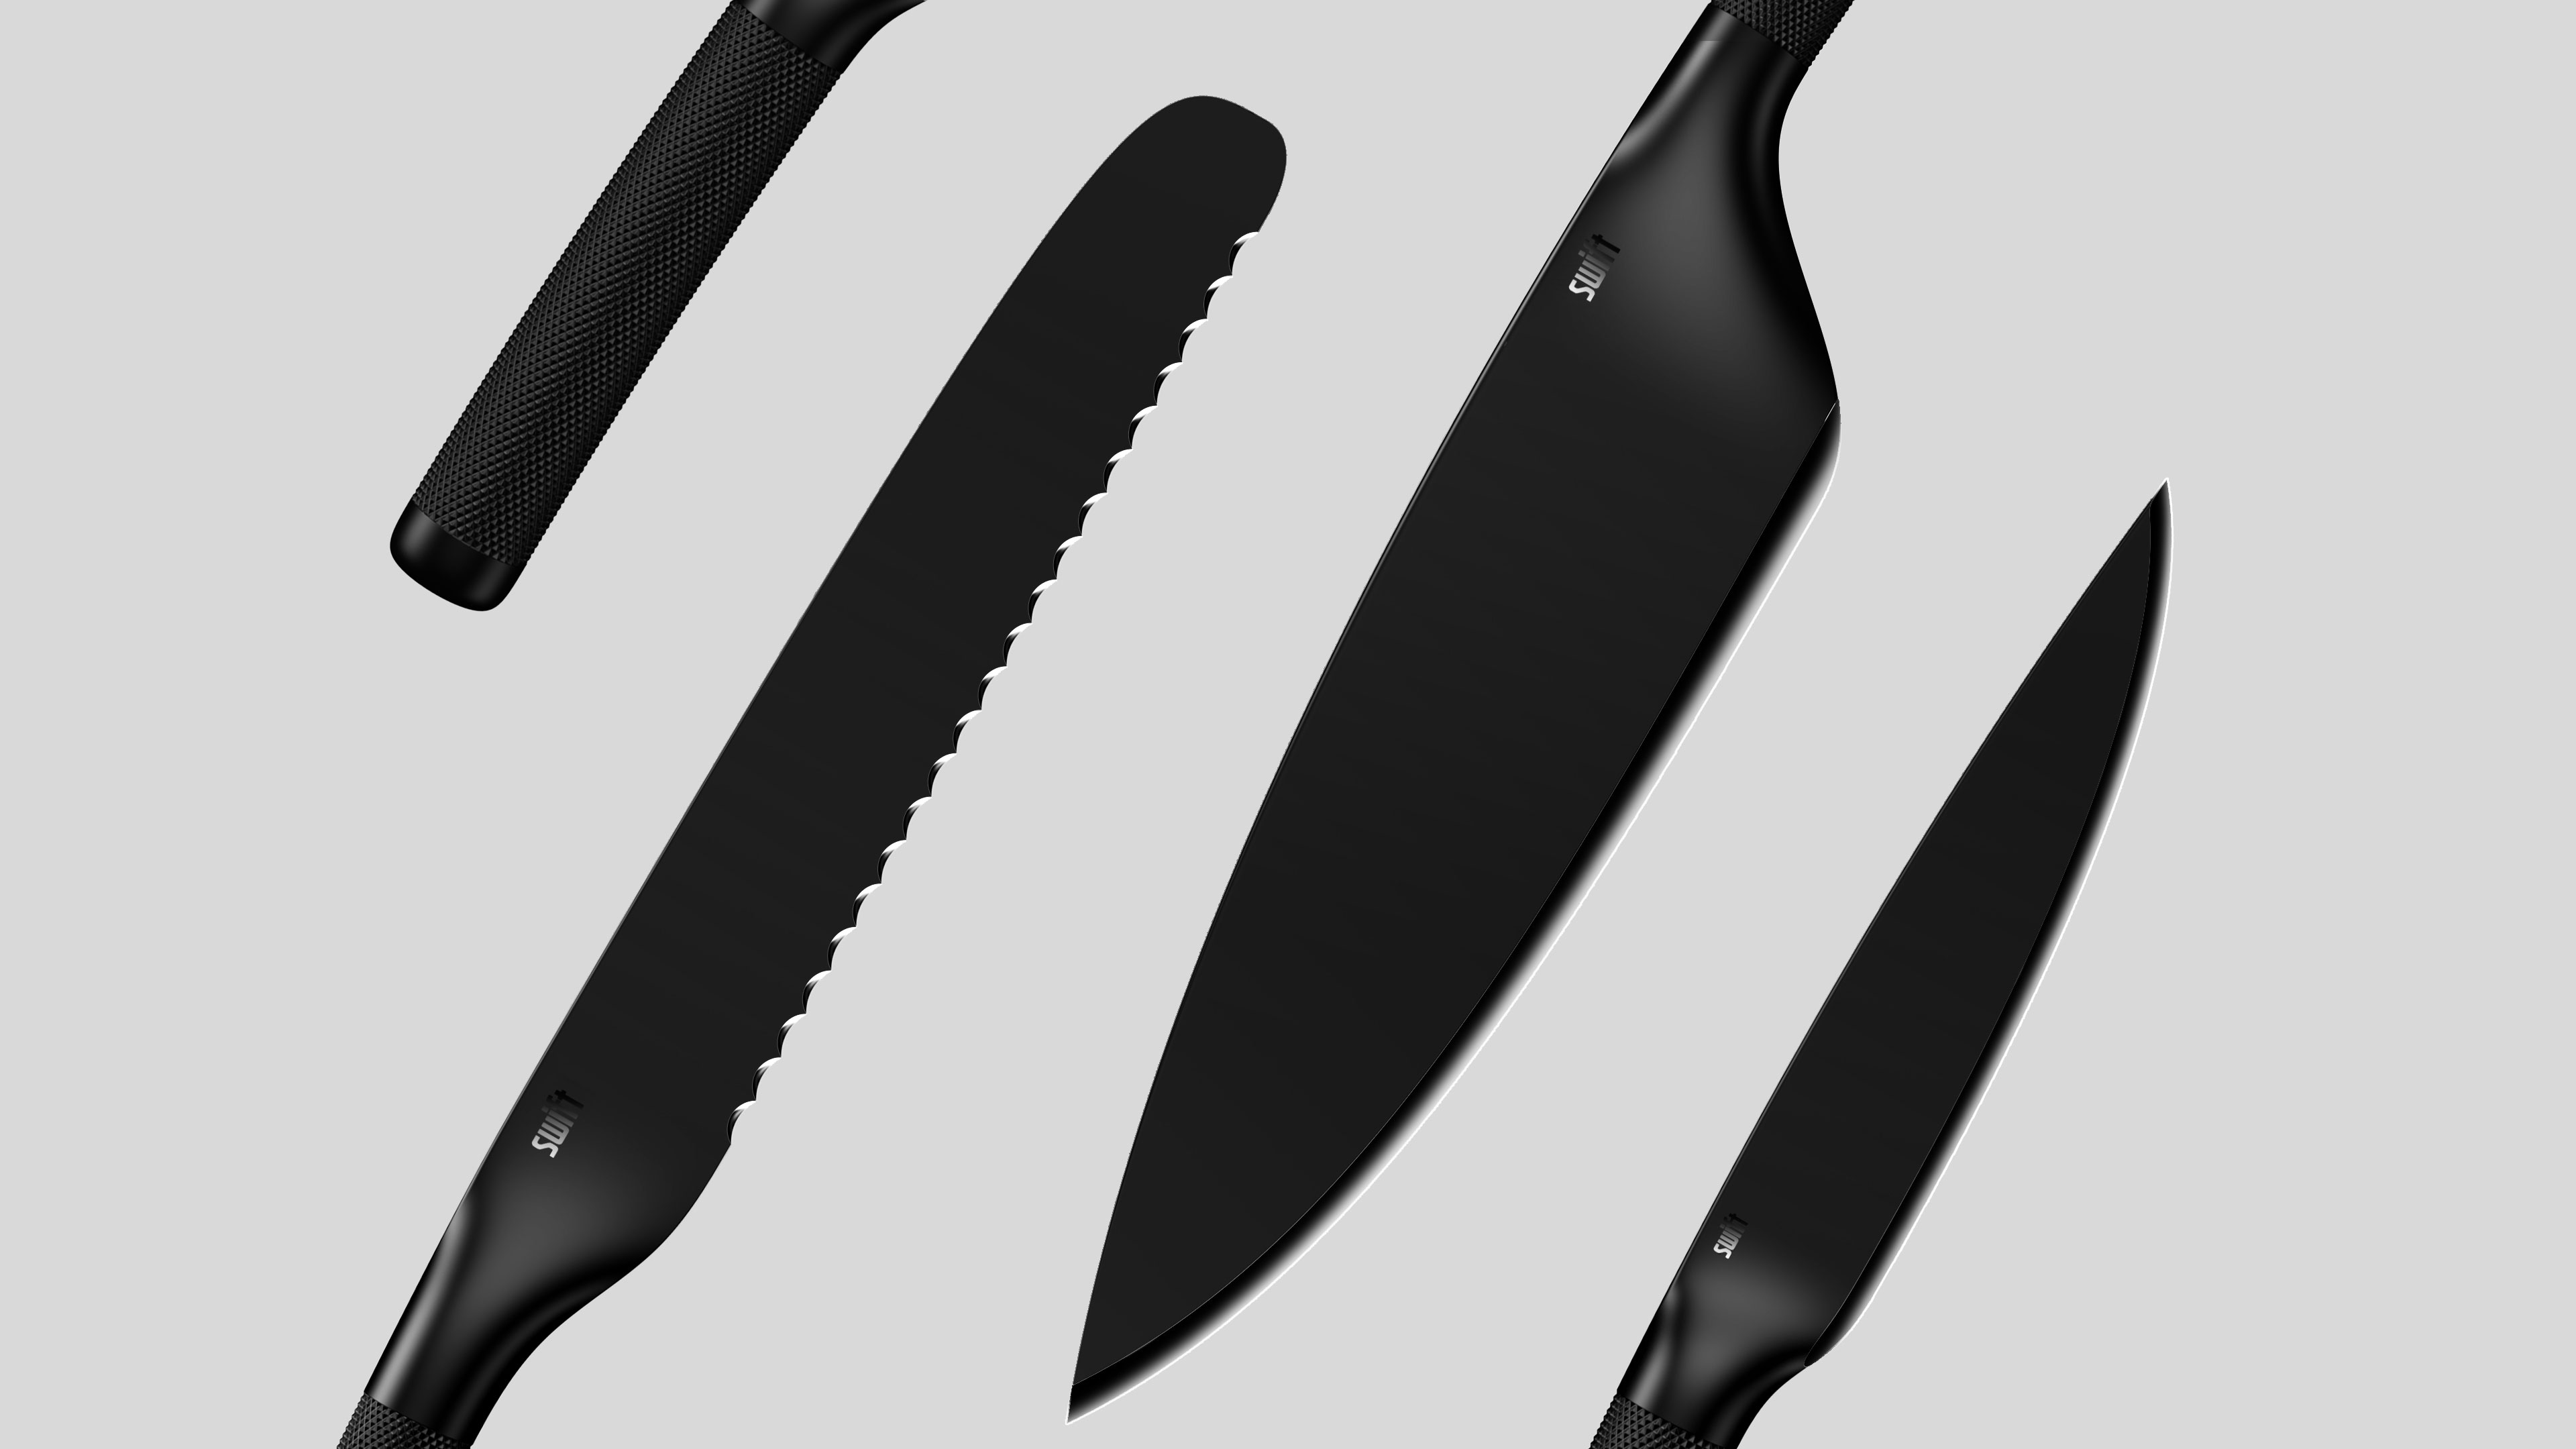 swift knife 3 piece set render